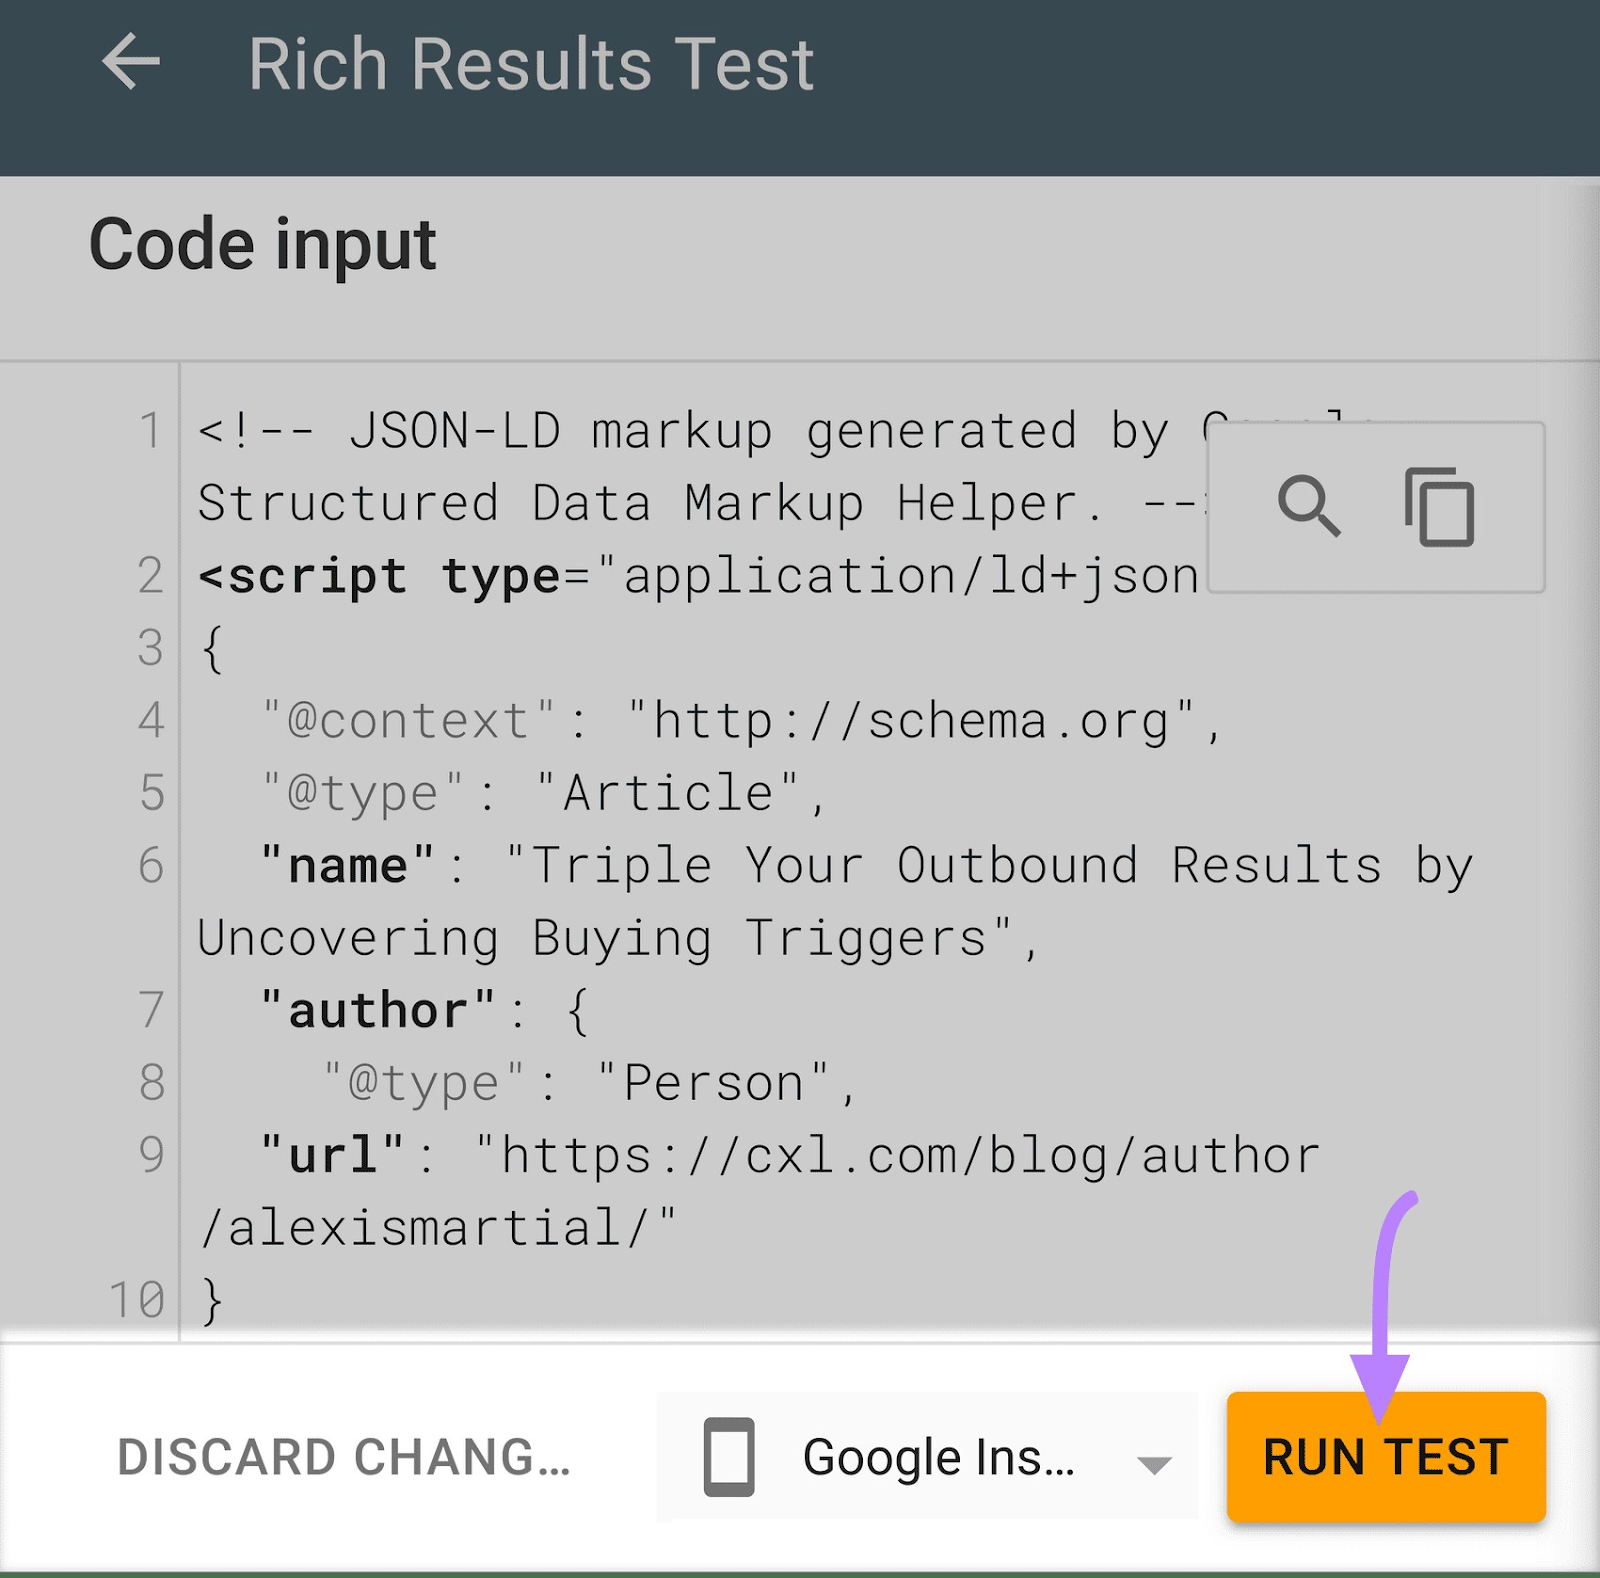 RUN TEST” button highlighted under code